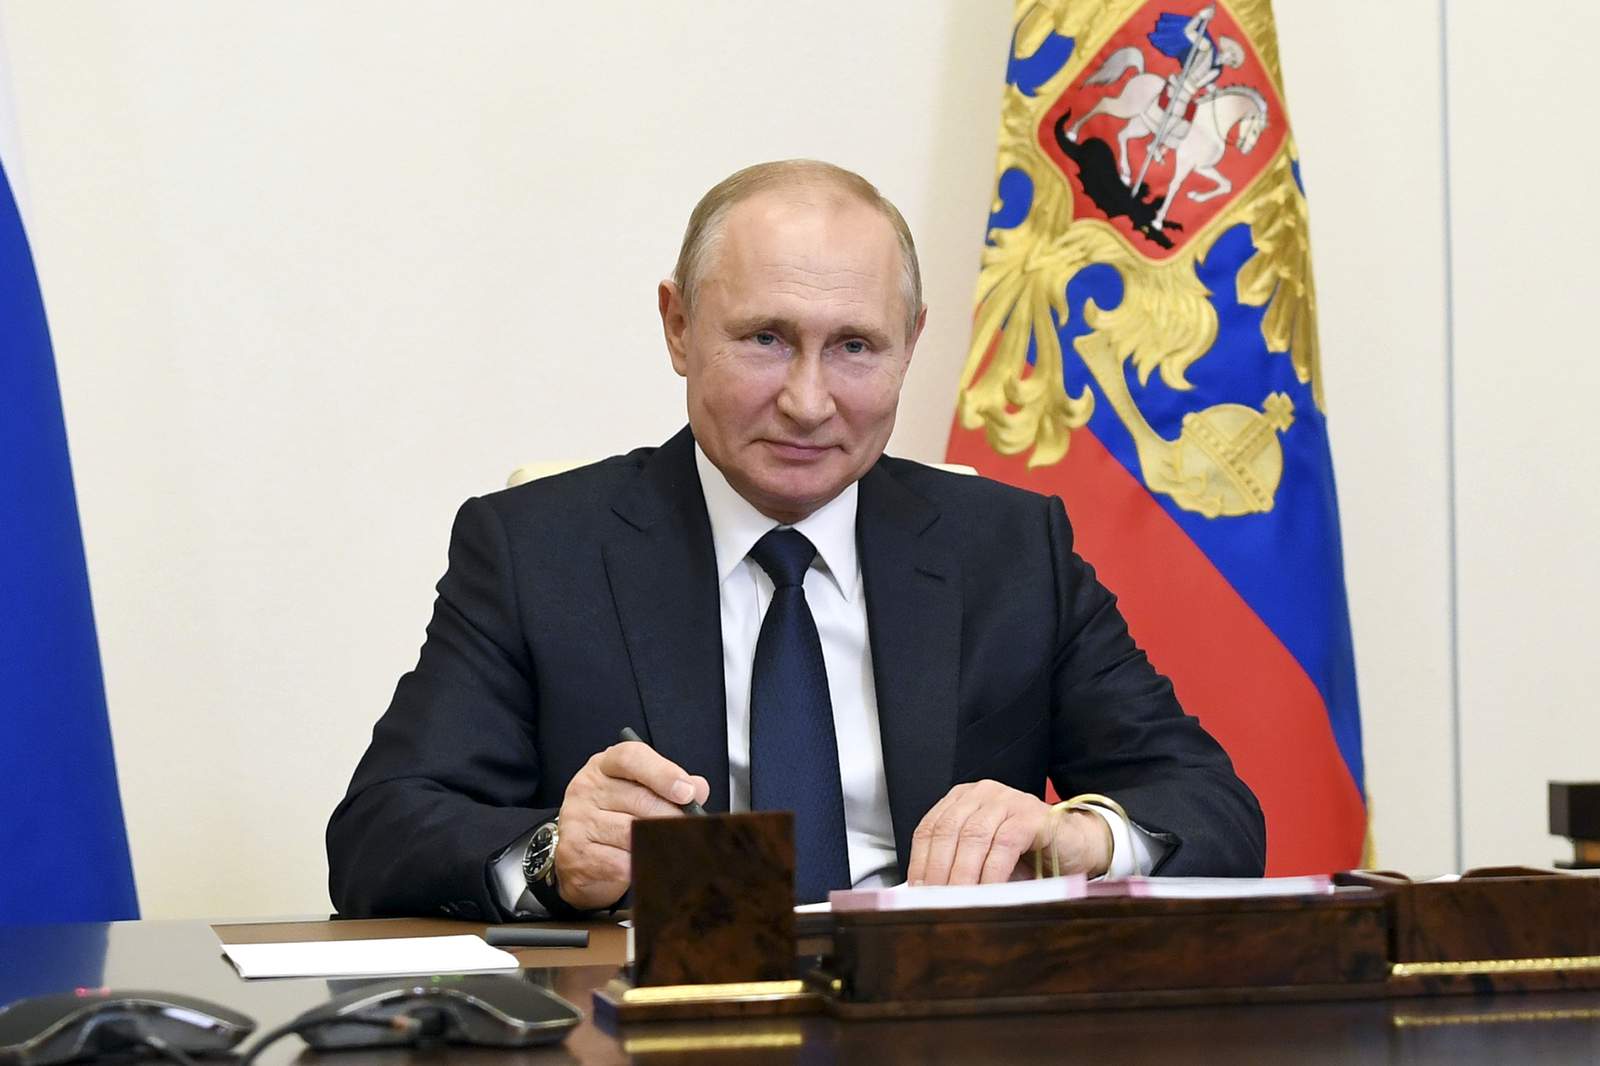 Kremlin: Trump tells Putin about idea for summit with Russia